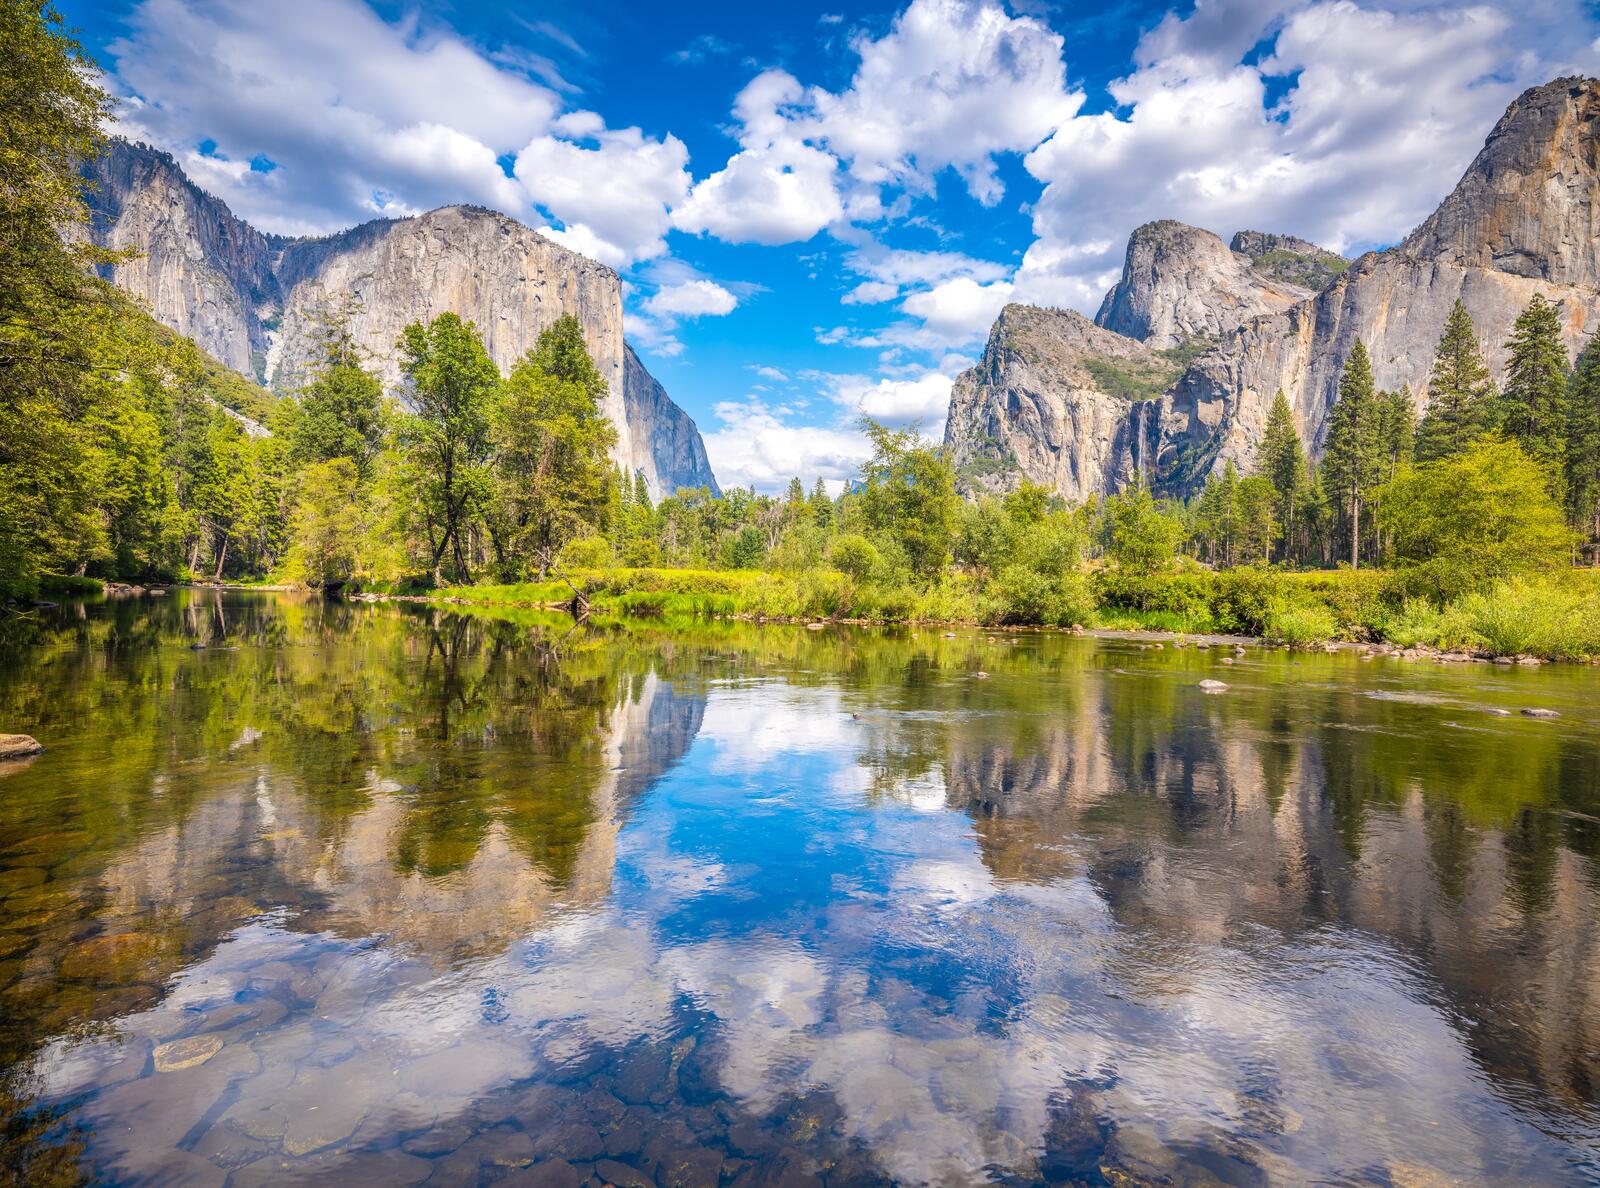 Wallpapers Yosemite Valley Yosemite National Park Merced River on the desktop